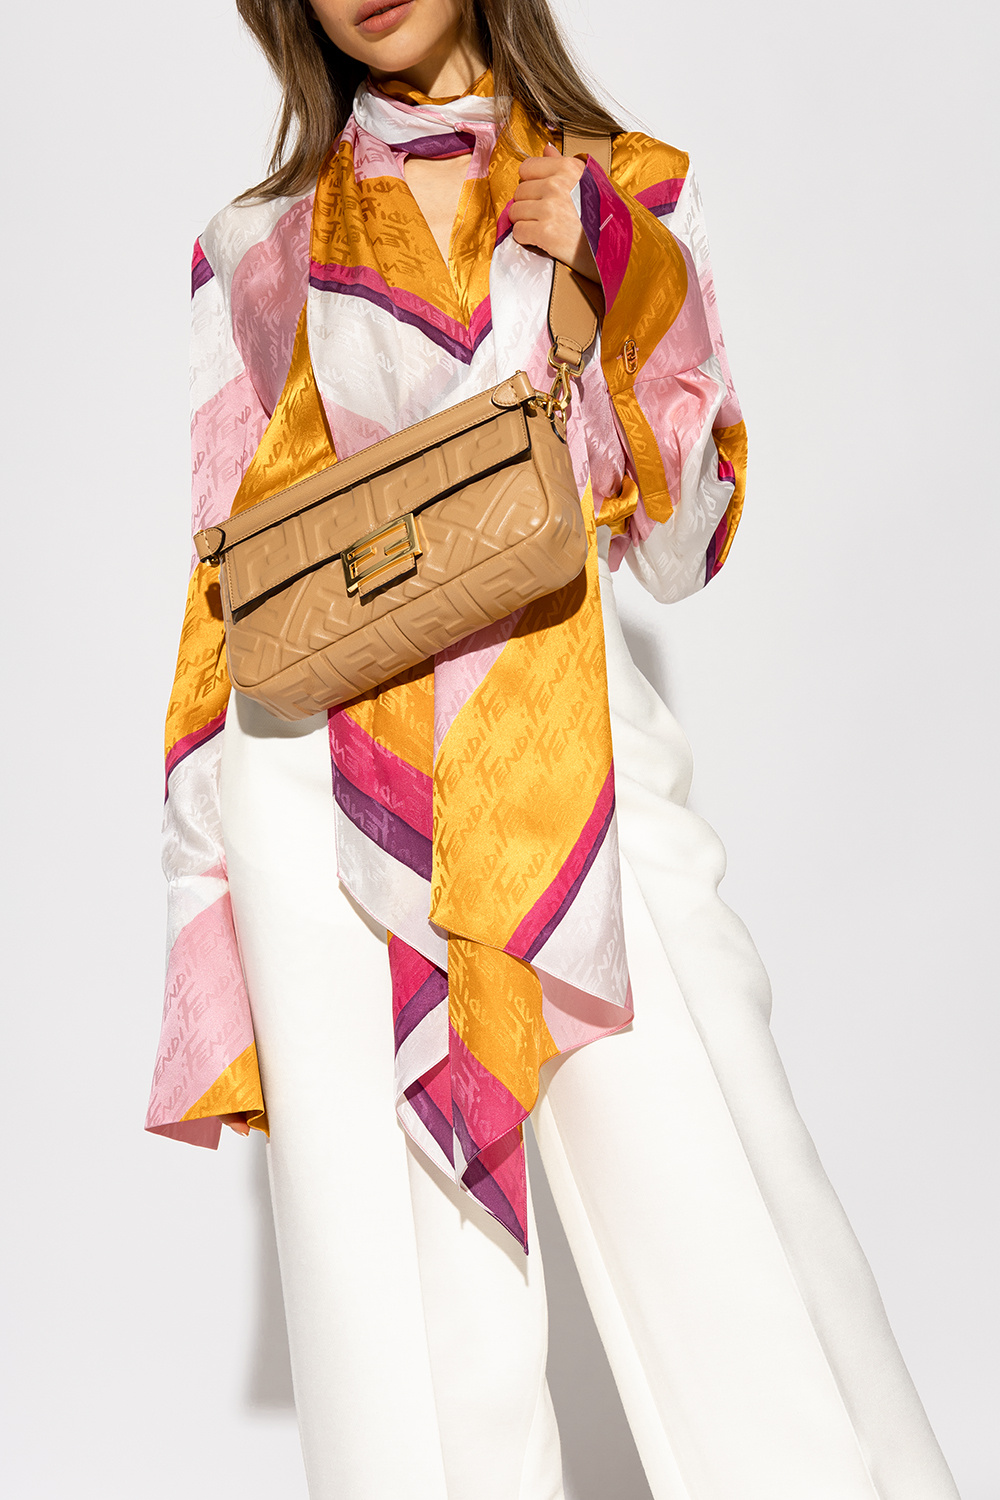 fendi model ’Baguette Medium’ shoulder bag